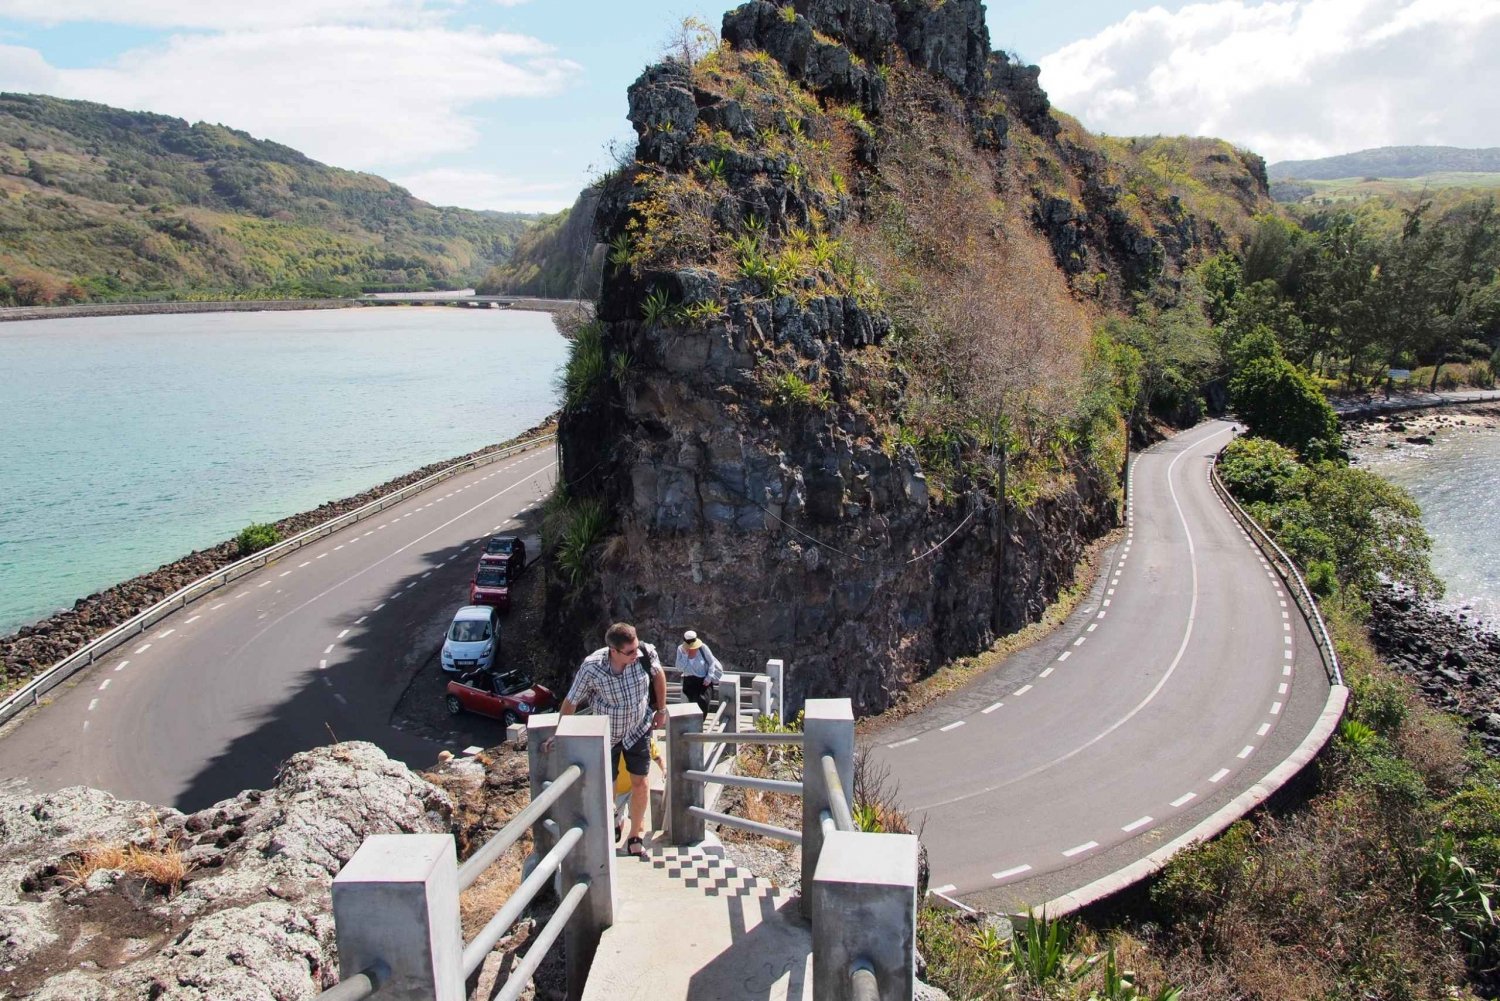 Mauritius à La Car: Full-Day Tour with Chauffeur Guide